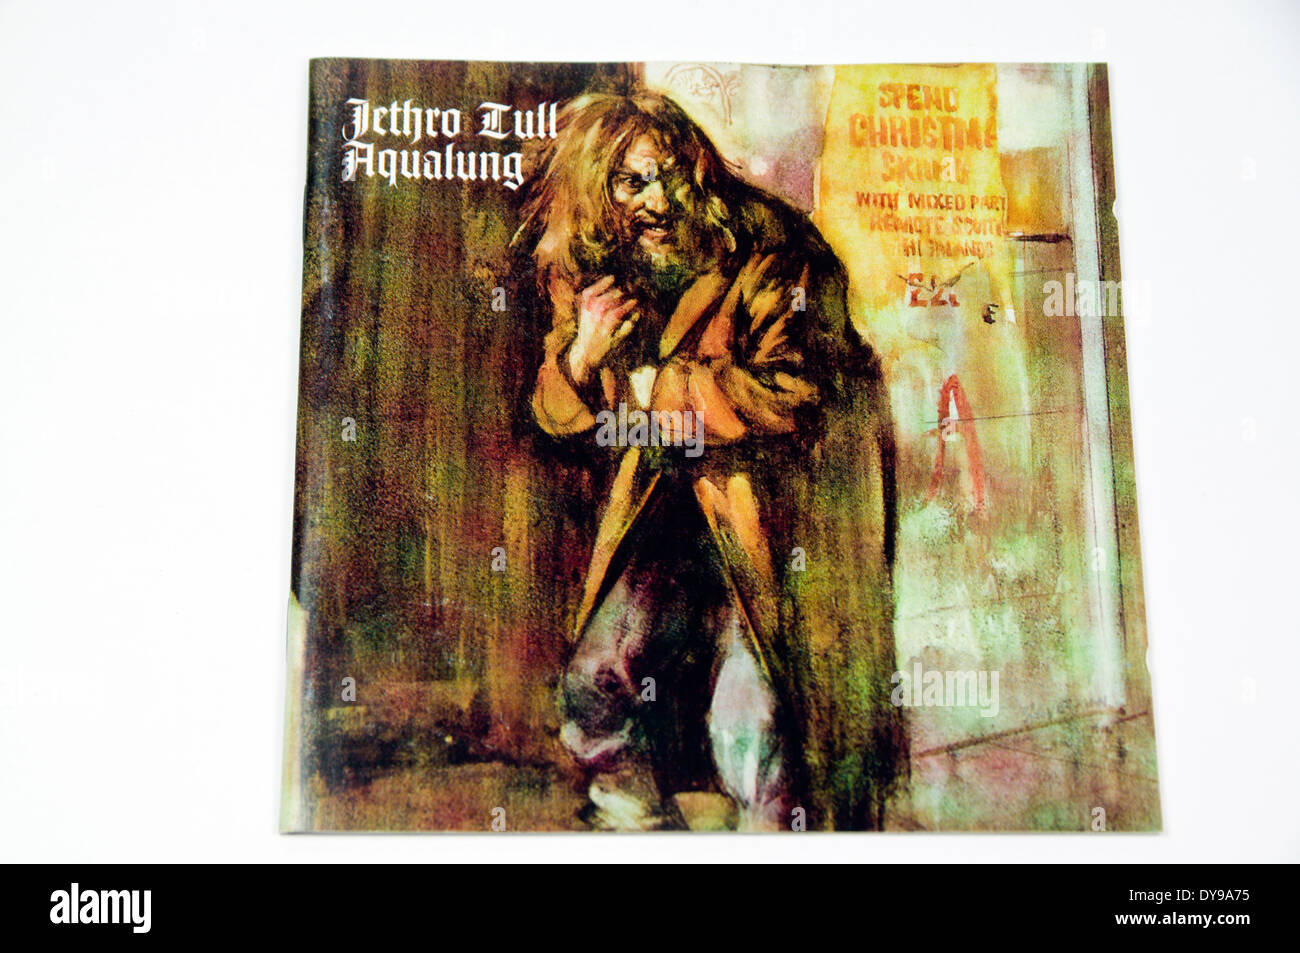 Jethro Tull "Aqualung" Prog rock Album Stock Photo - Alamy